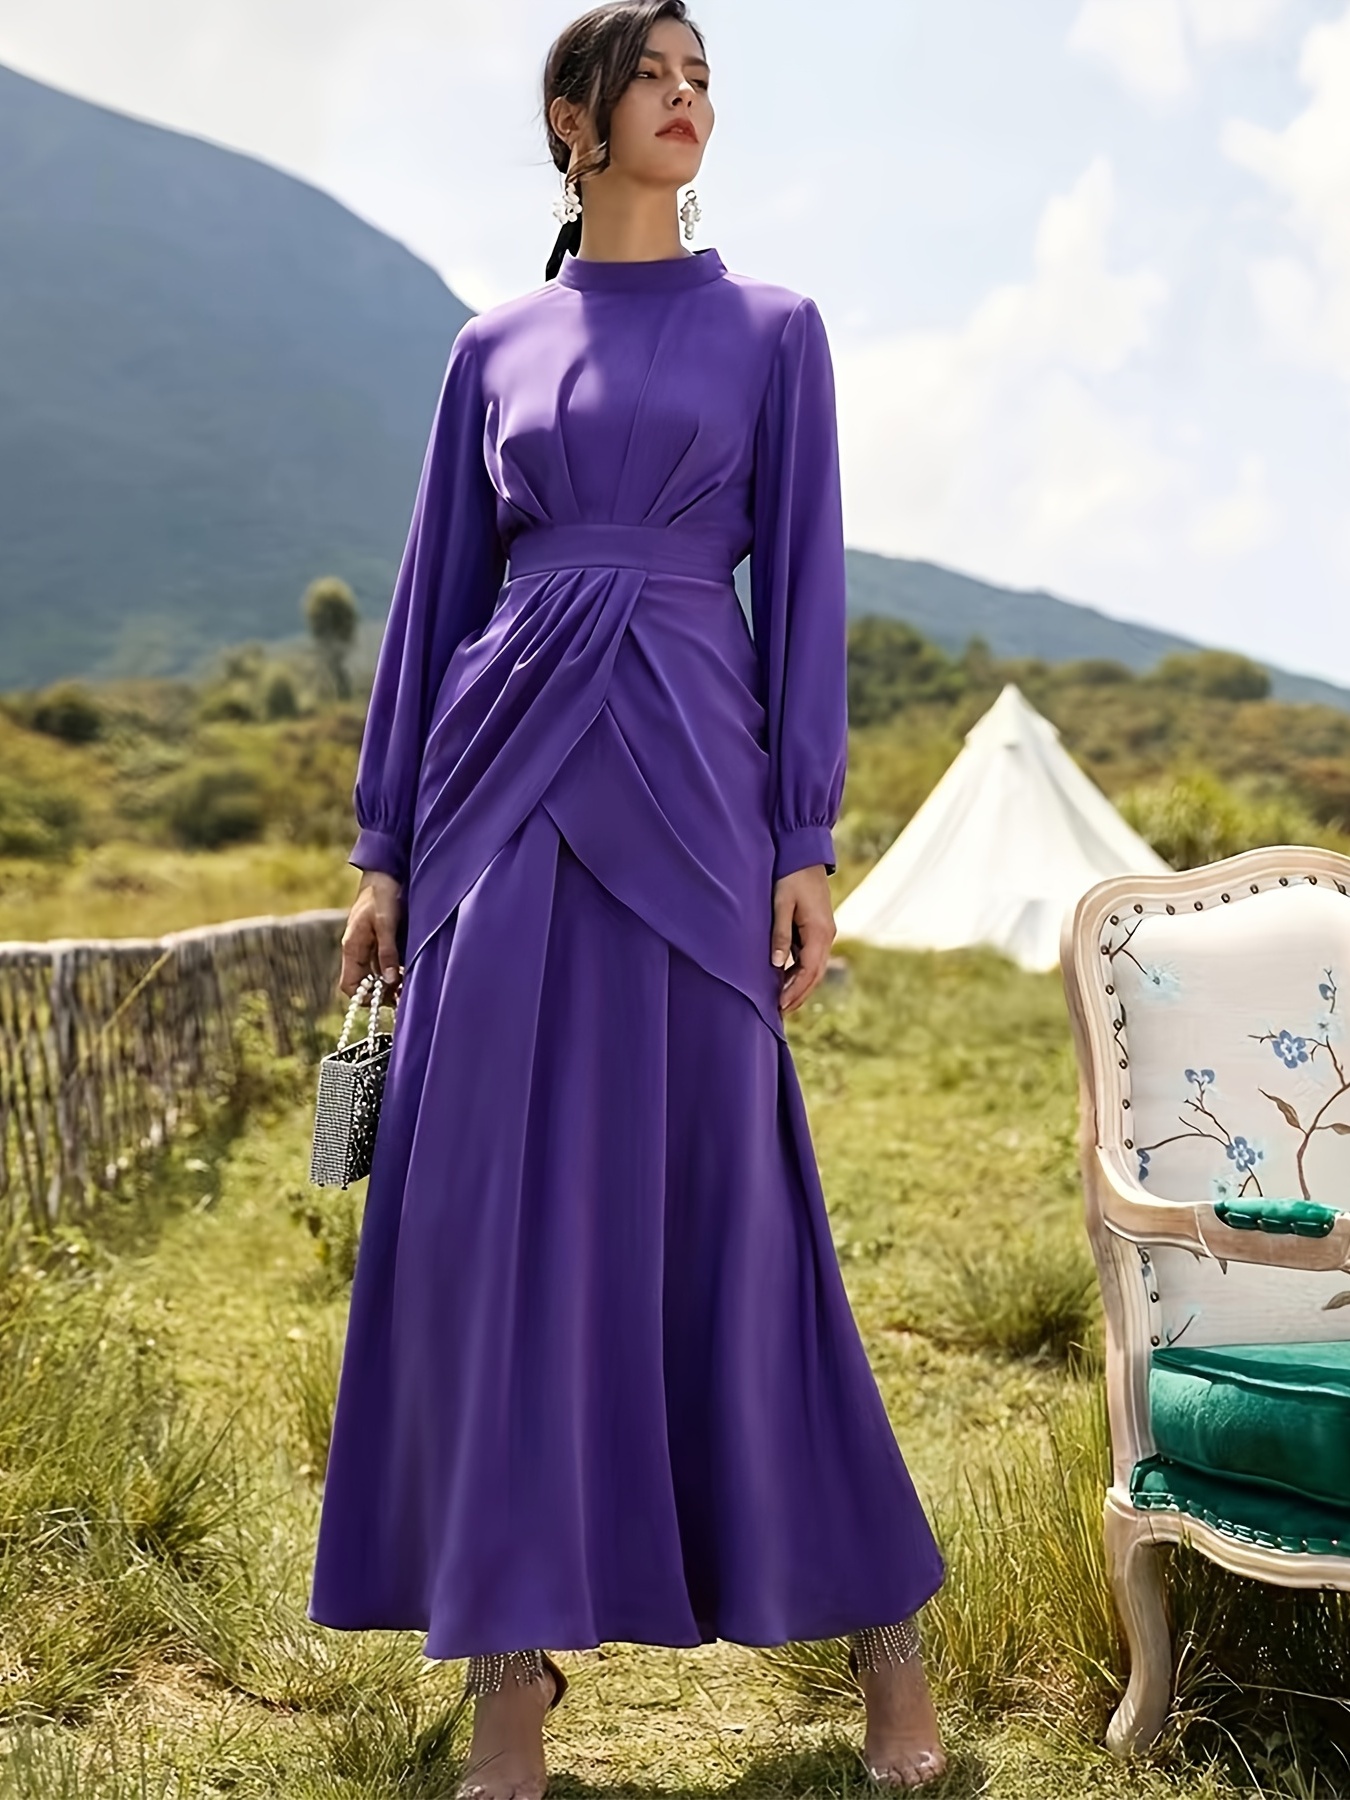  Women's Casual Dresses - Purples / Women's Casual